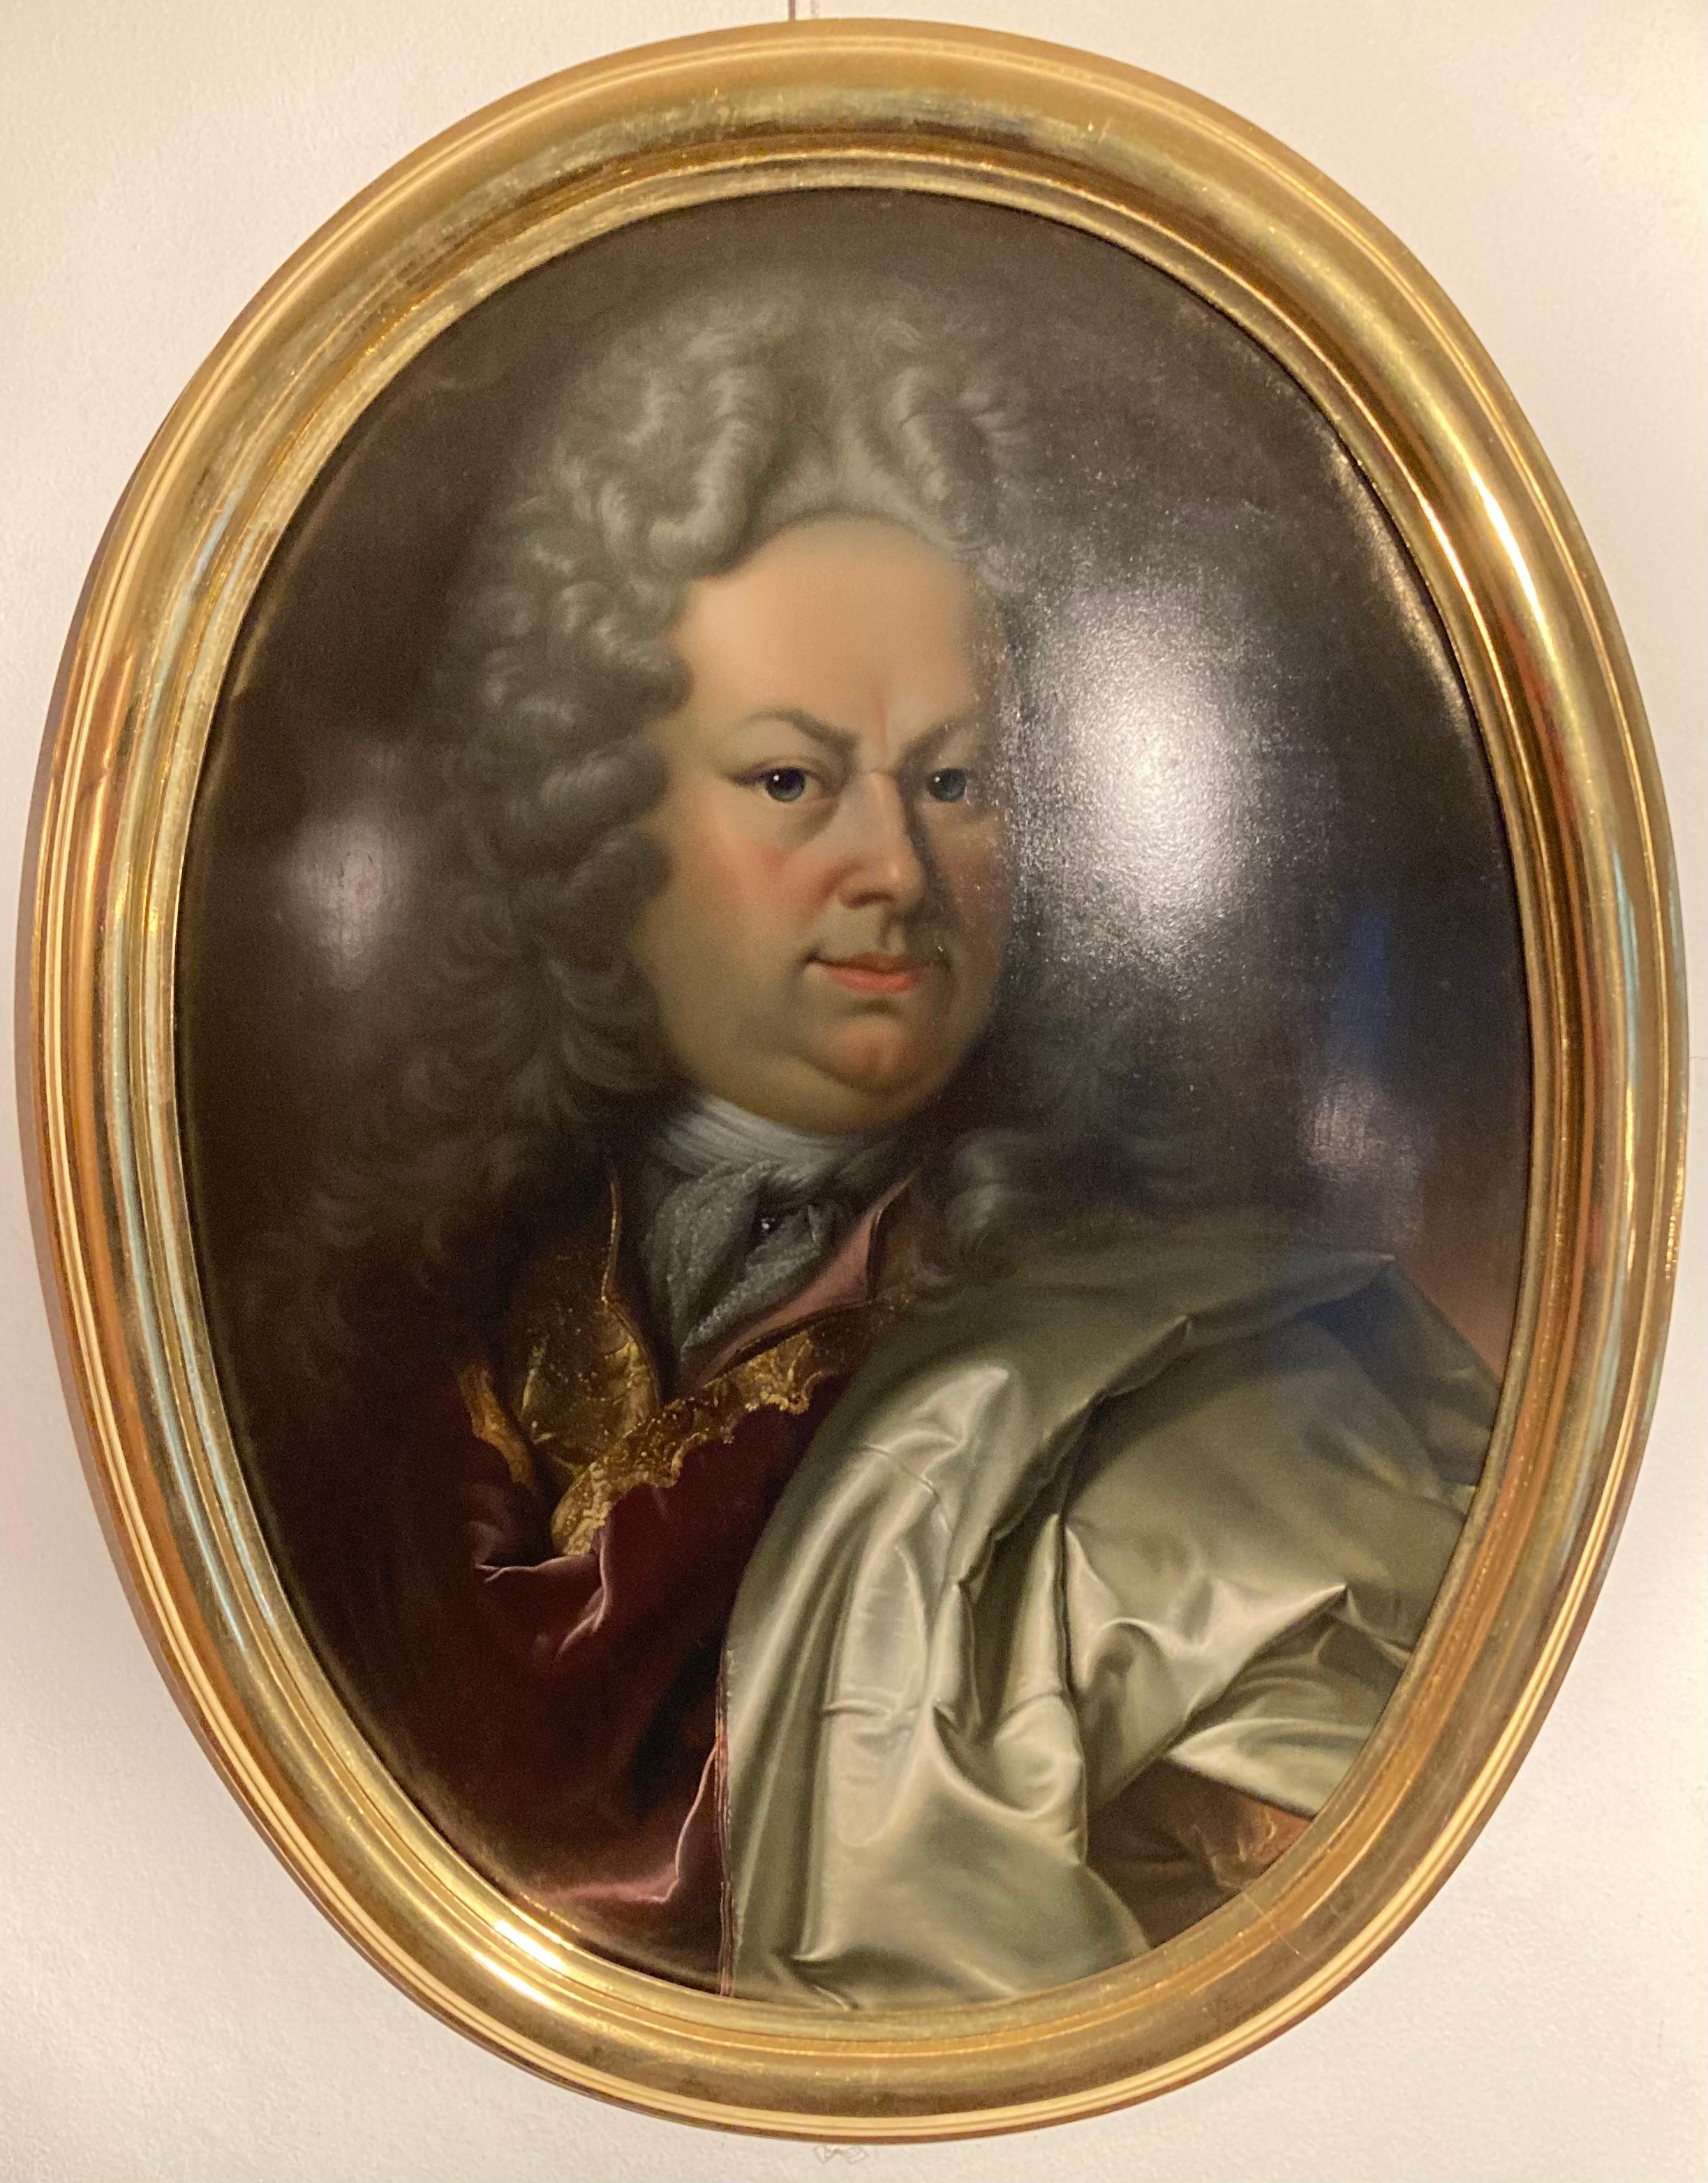 Portrait of a Gentleman, Halung, Court Painter Schildbach, Gotha, Convex Copper For Sale 10